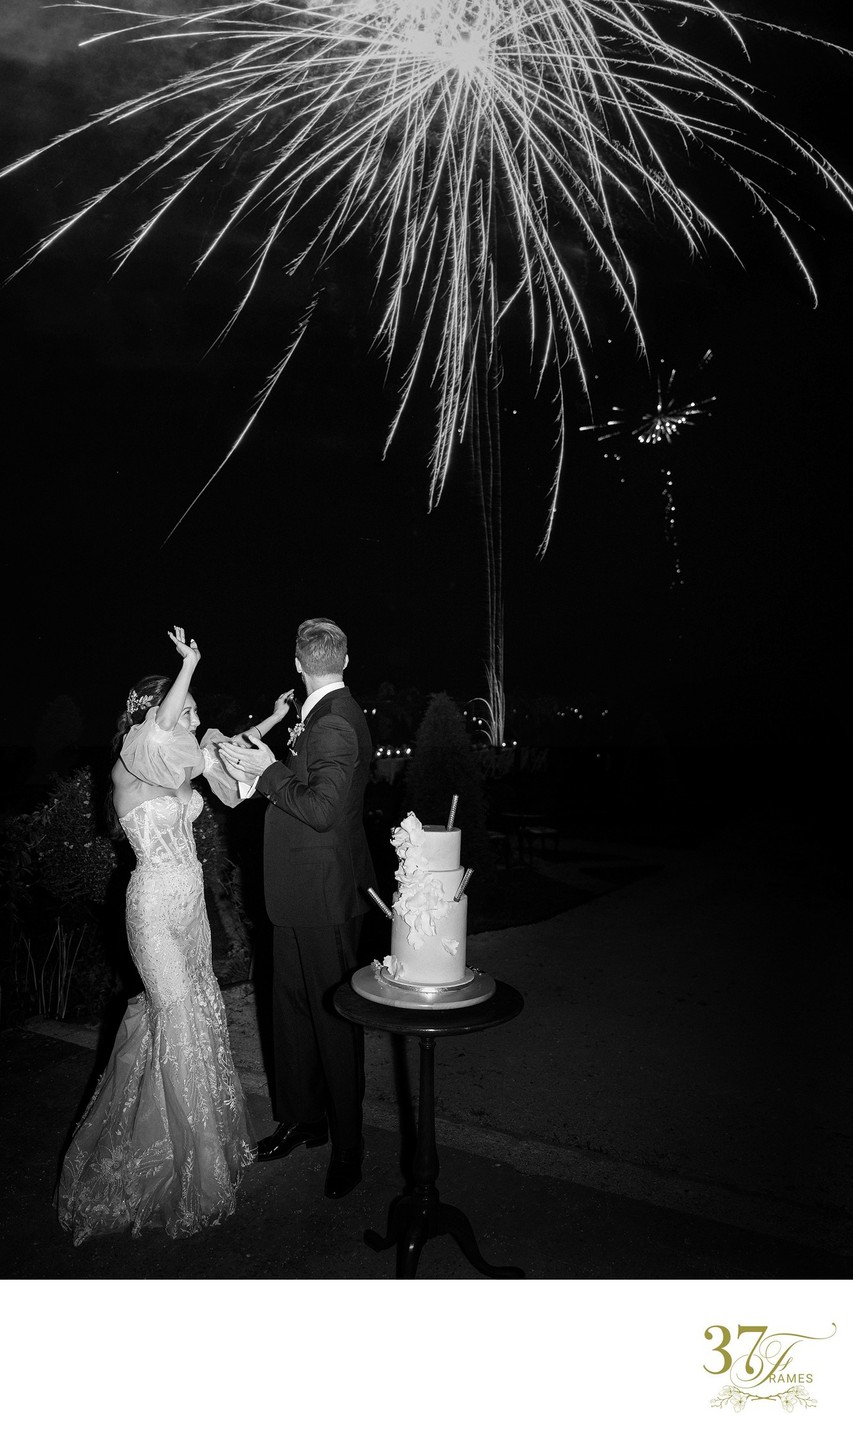 When Love Ignites: Fireworks Ignite Passion at Wedding